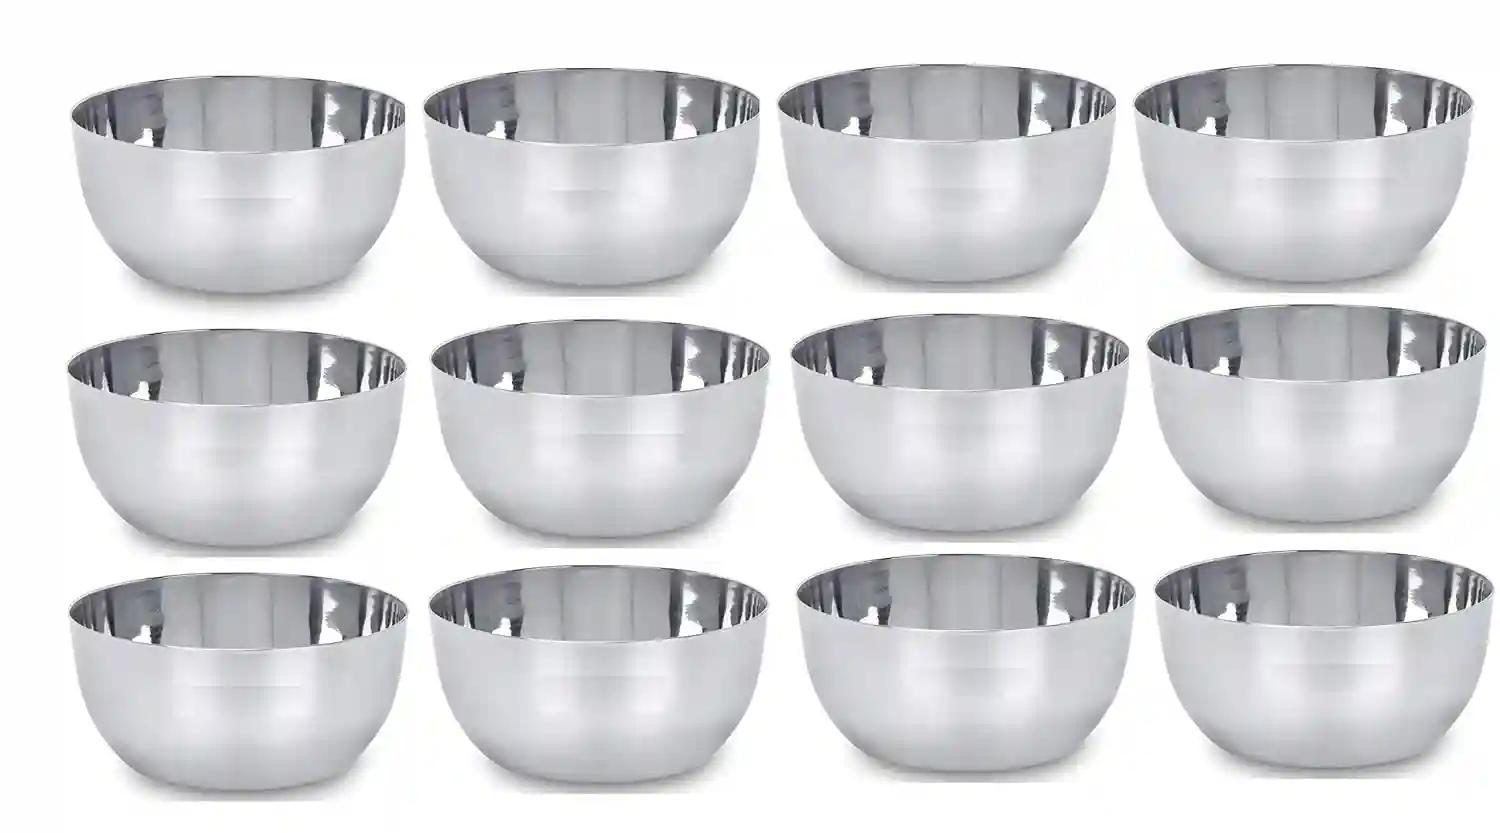 PROJAIN STEEL Mirror Polish Stainless Steel Bowl Set, 12 Pieces